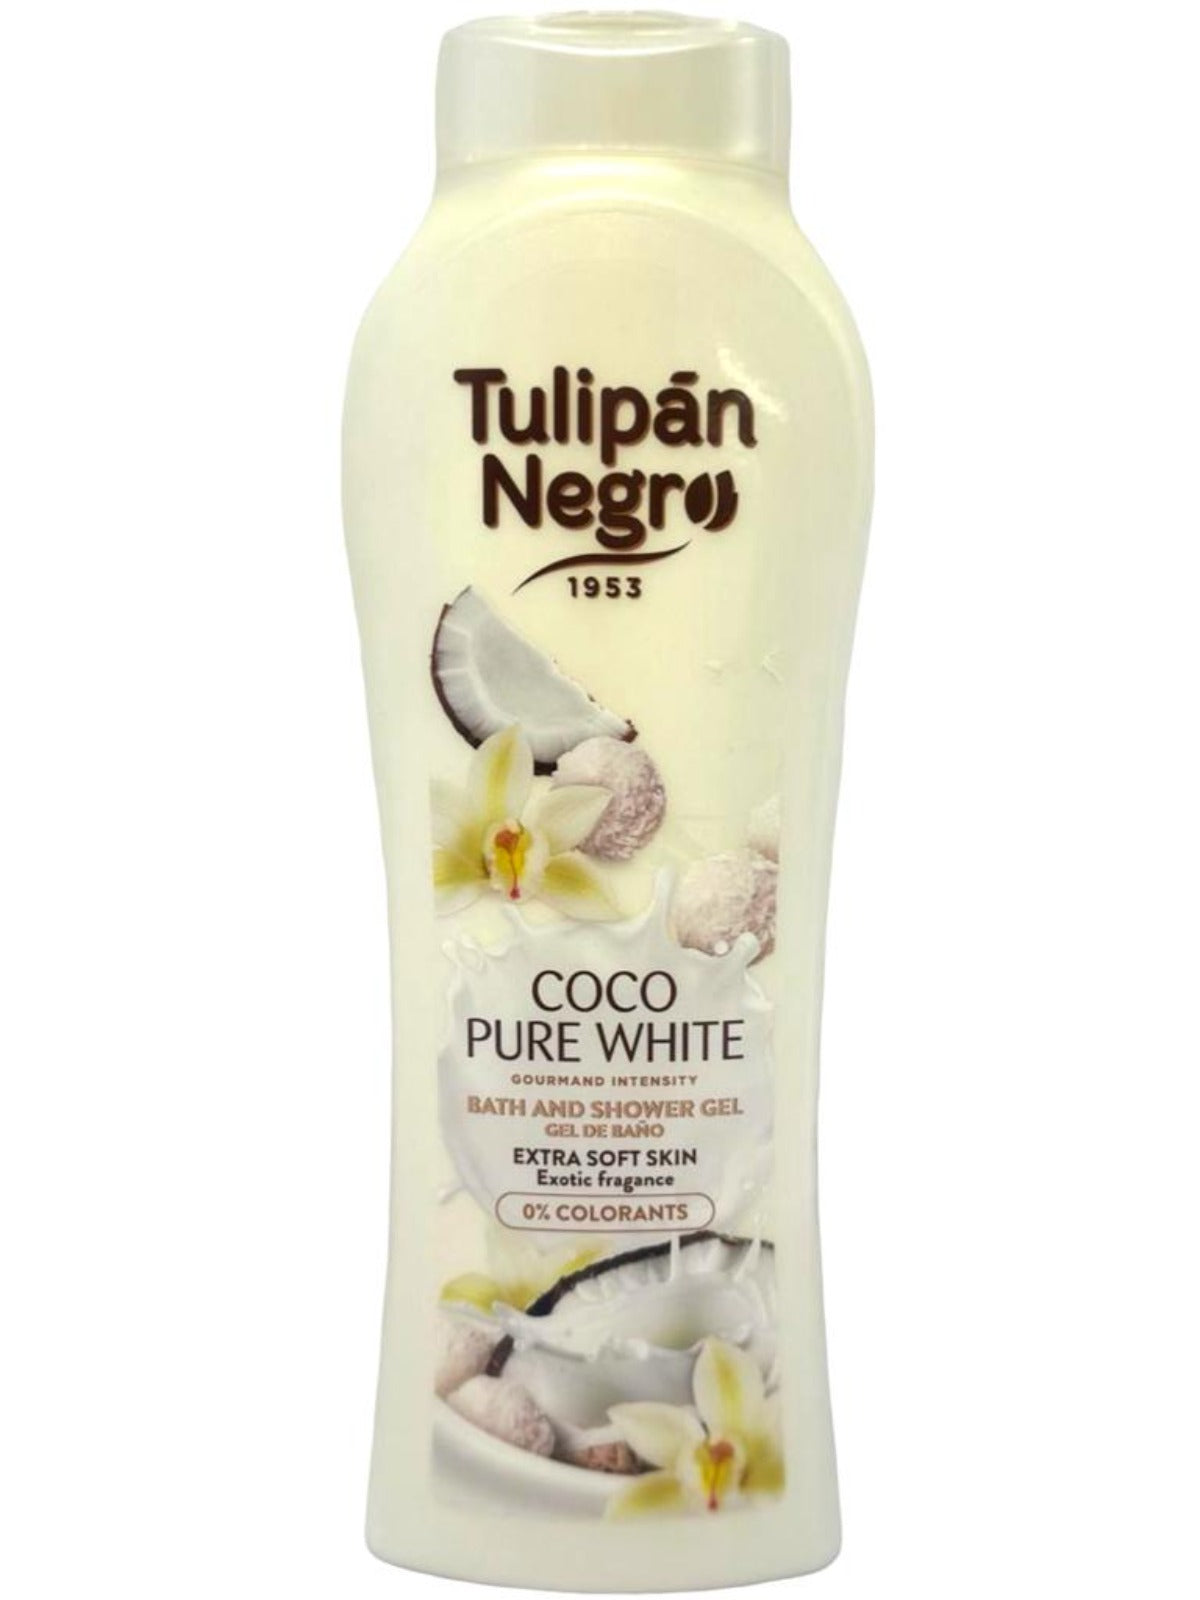 Tulipan Negro Coco Pure White Spanish Bath And Shower Gel 650ml